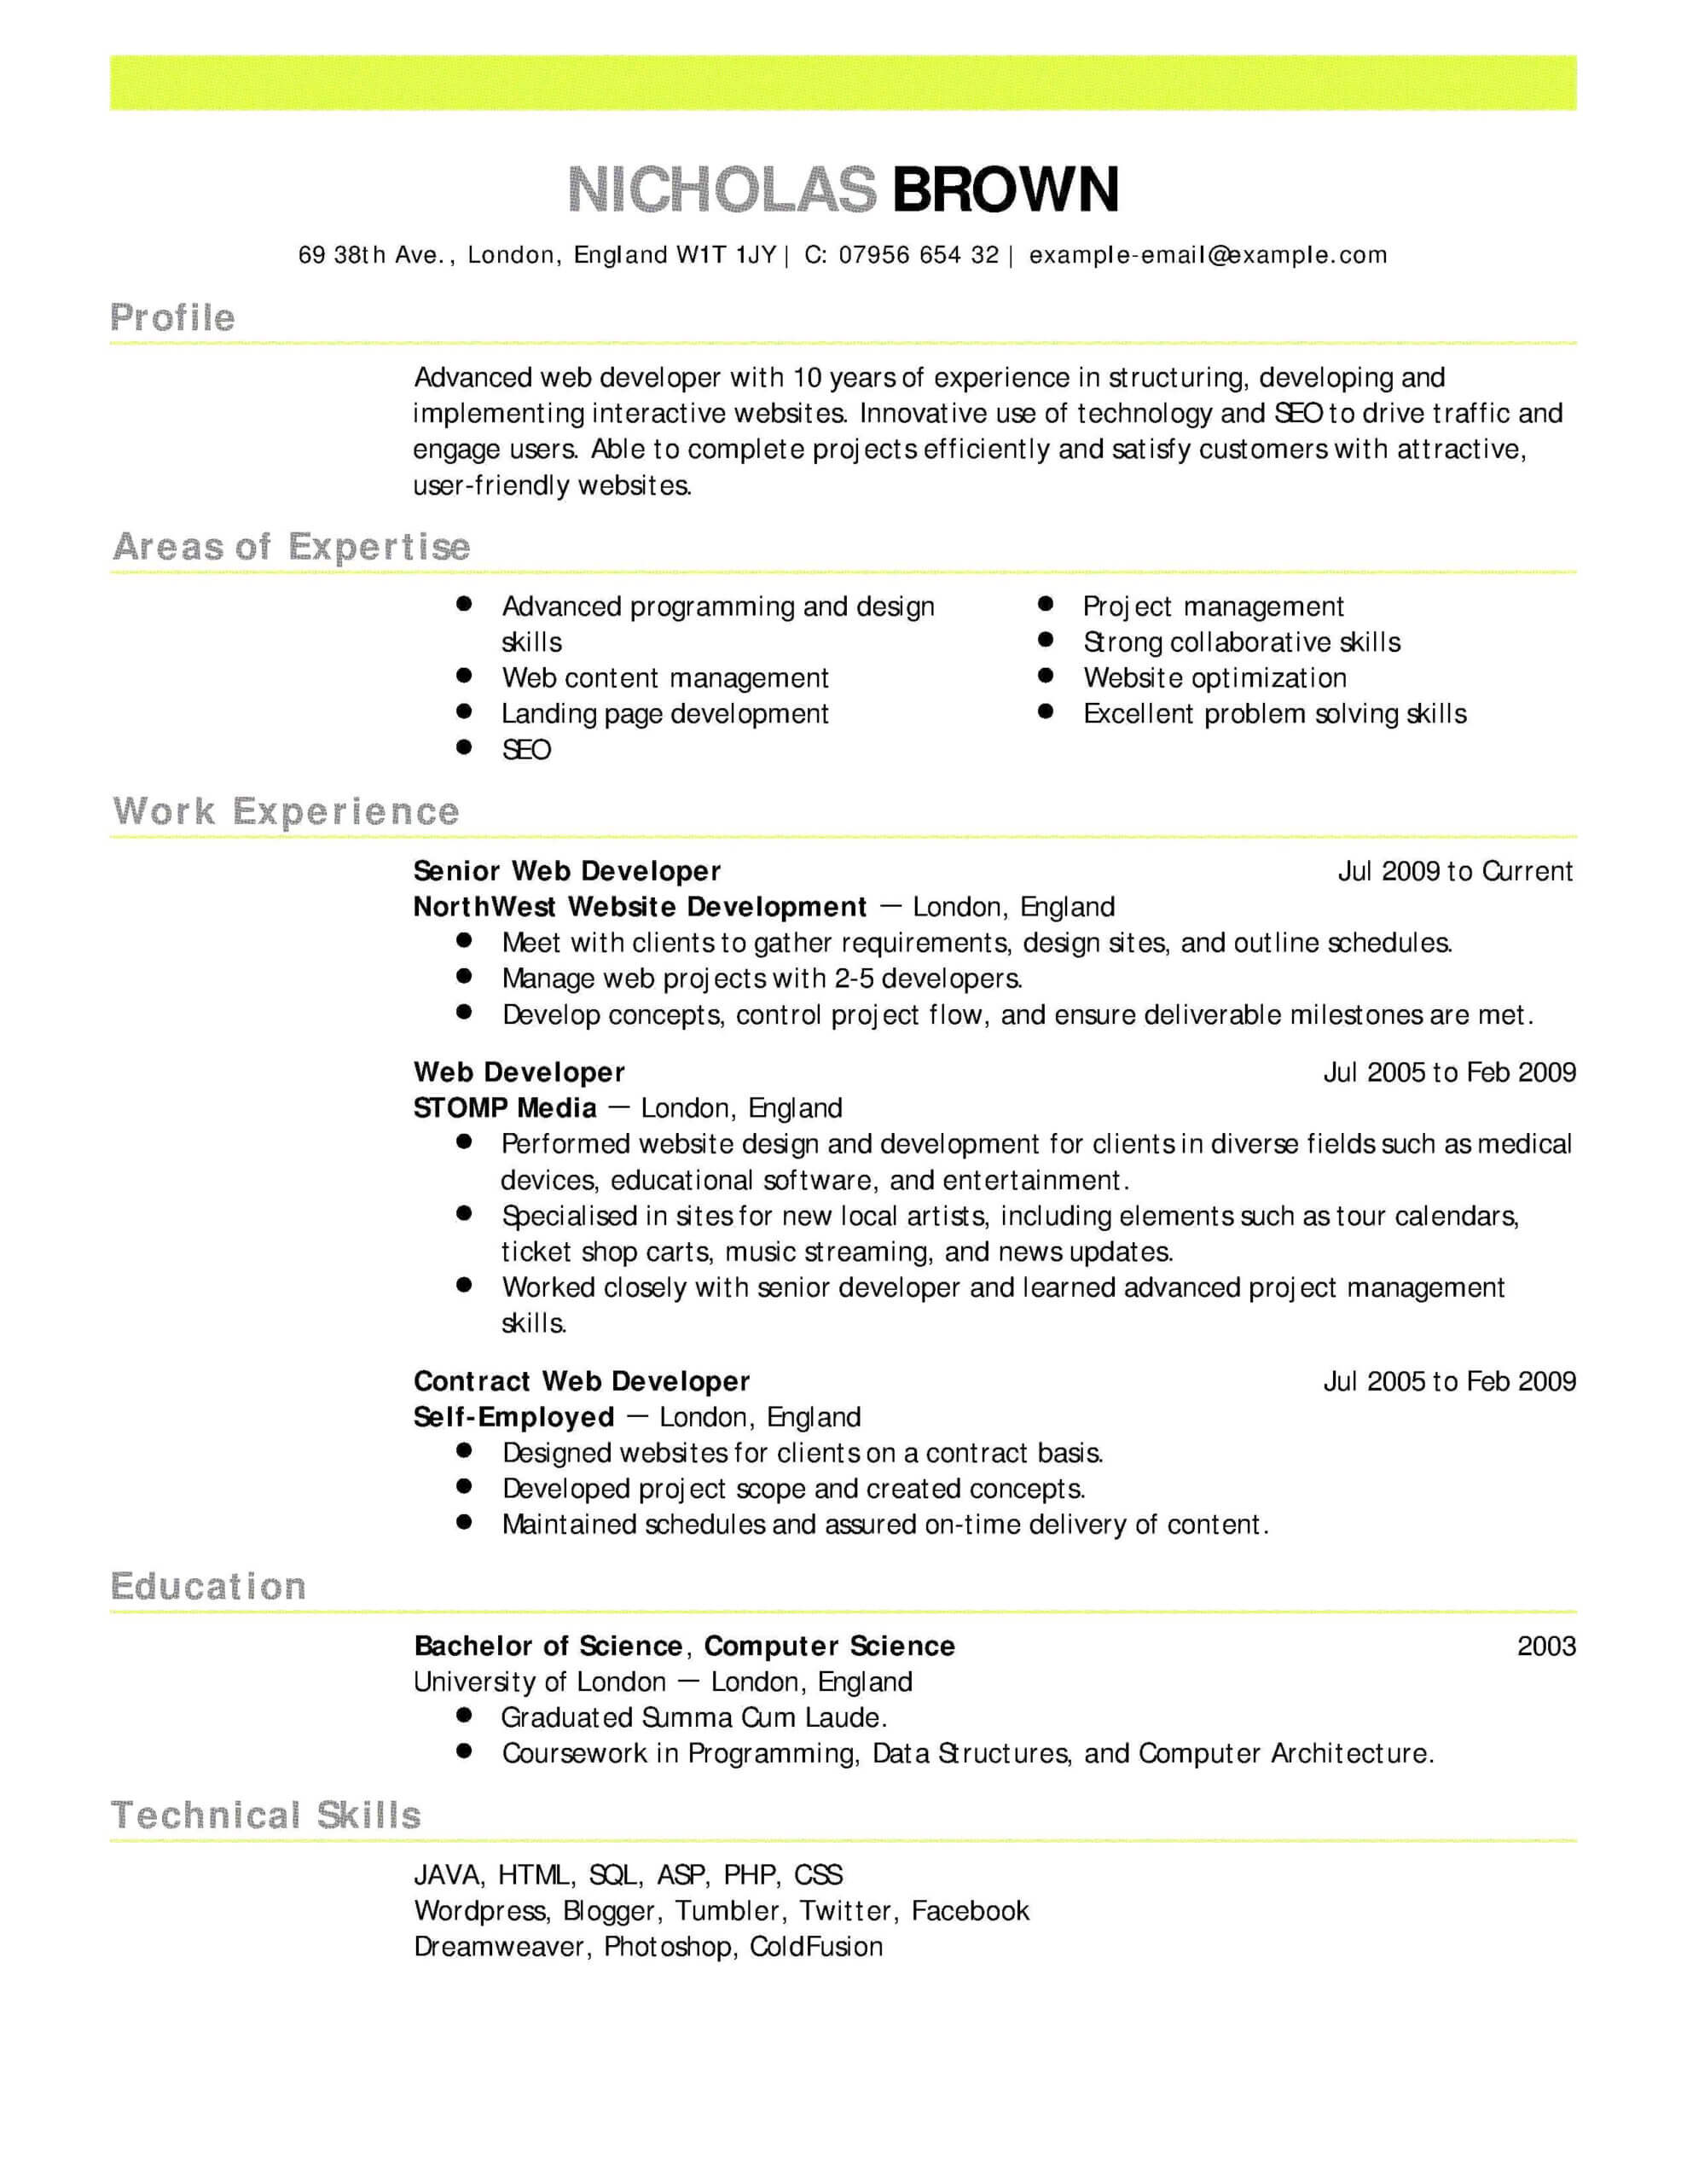 Free Microsoft Resume Templates For Resume Templates Microsoft Word 2010